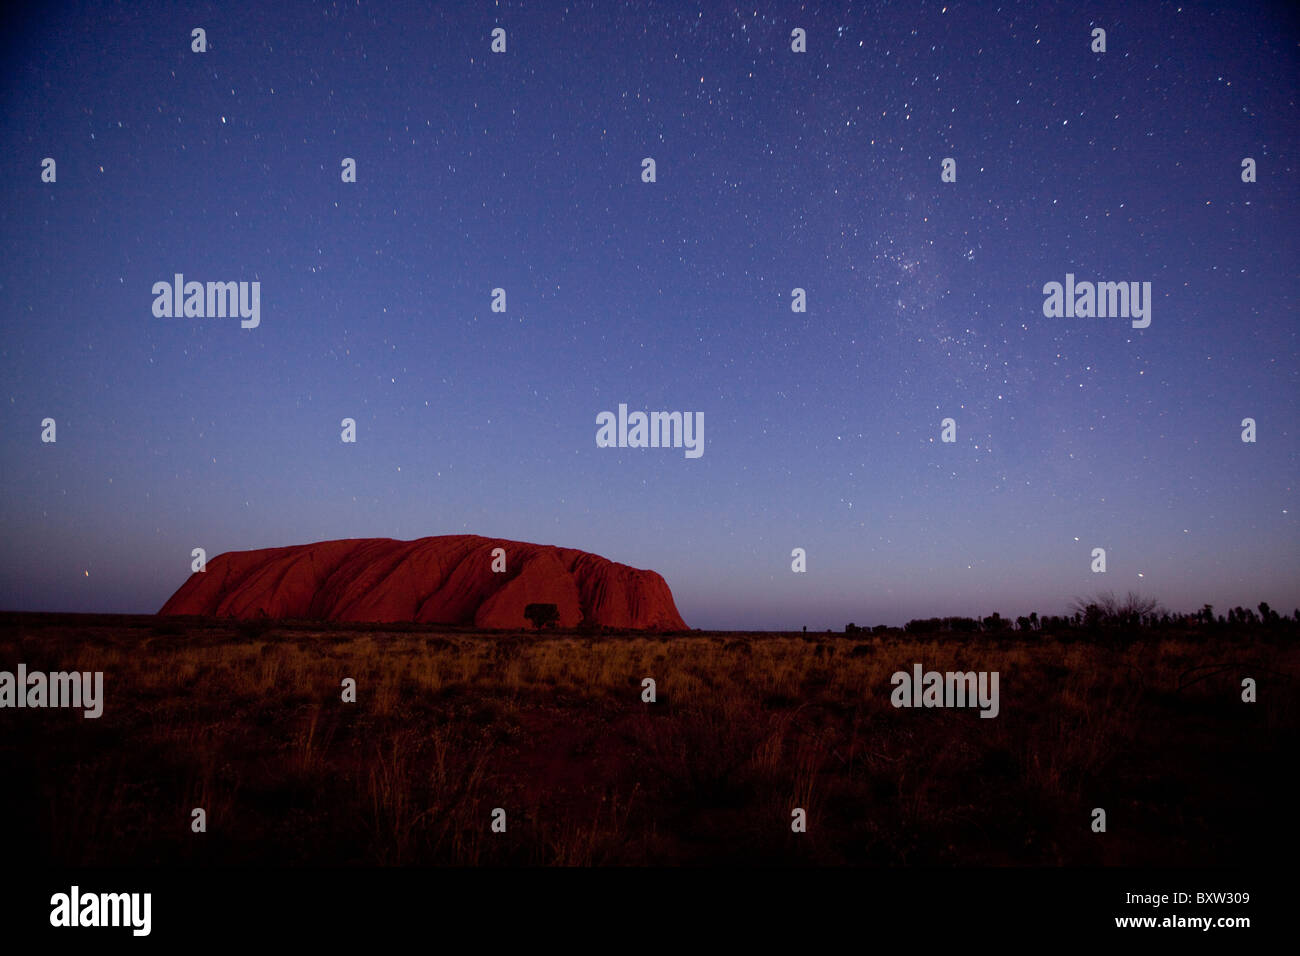 Australien, Northern Territory, Uluru - Kata Tjuta National Park, Sterne Kreis über Ayers Rock in der Abenddämmerung am Sommerabend Stockfoto